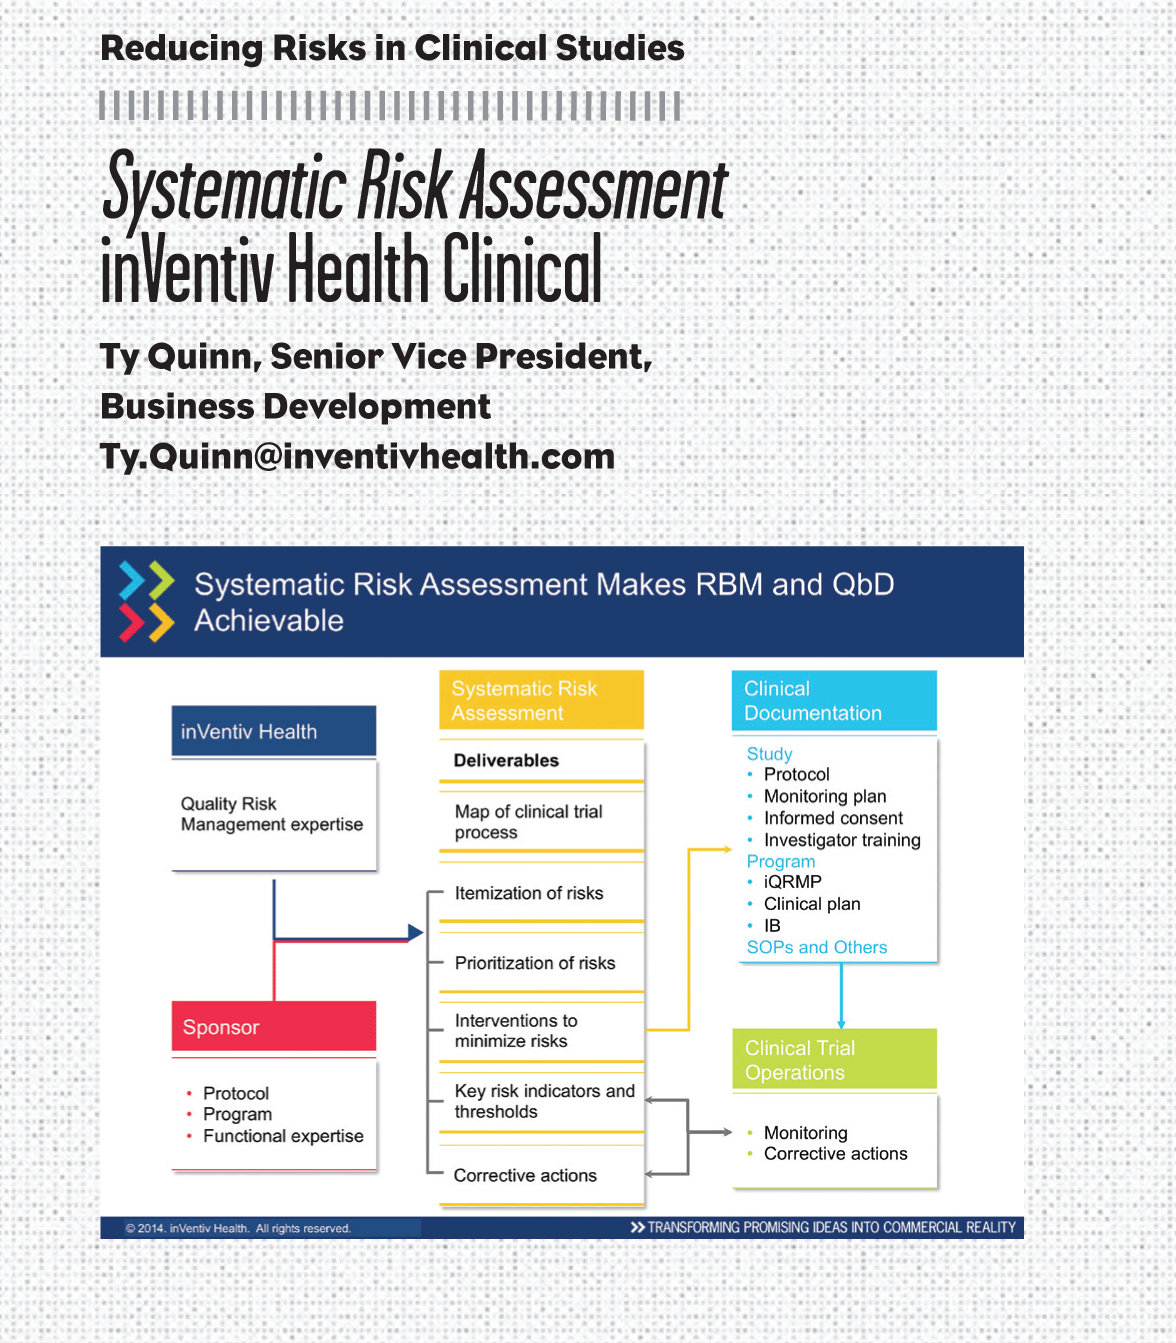 inVentiv-health_Clinical